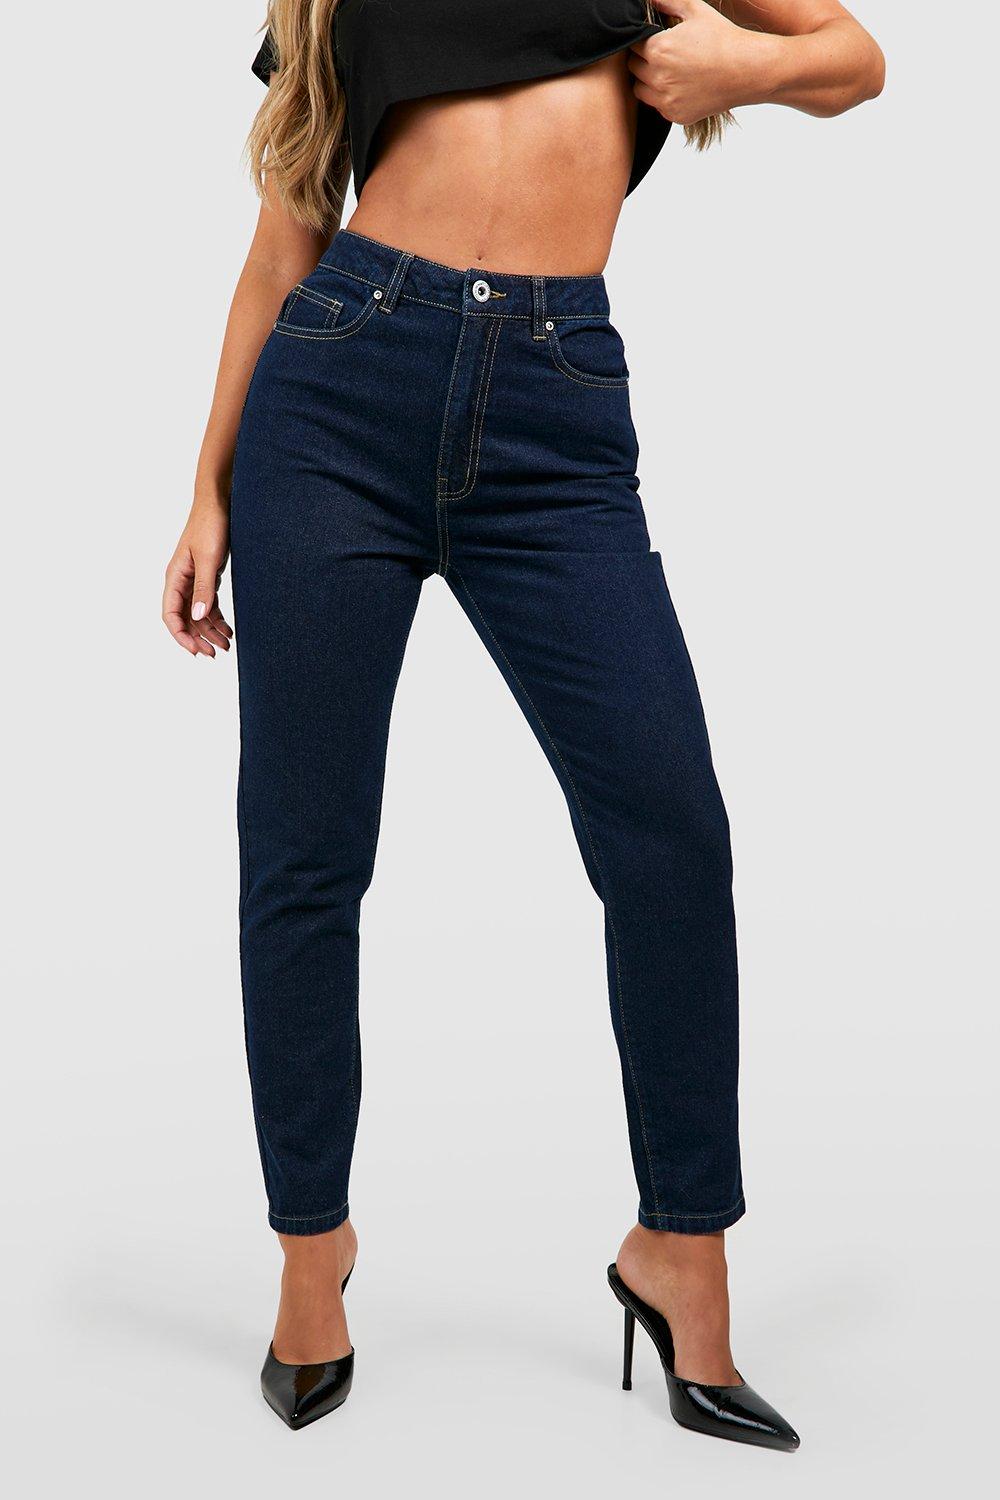 Women's Basics High Waisted Slim Fit Mom Jeans